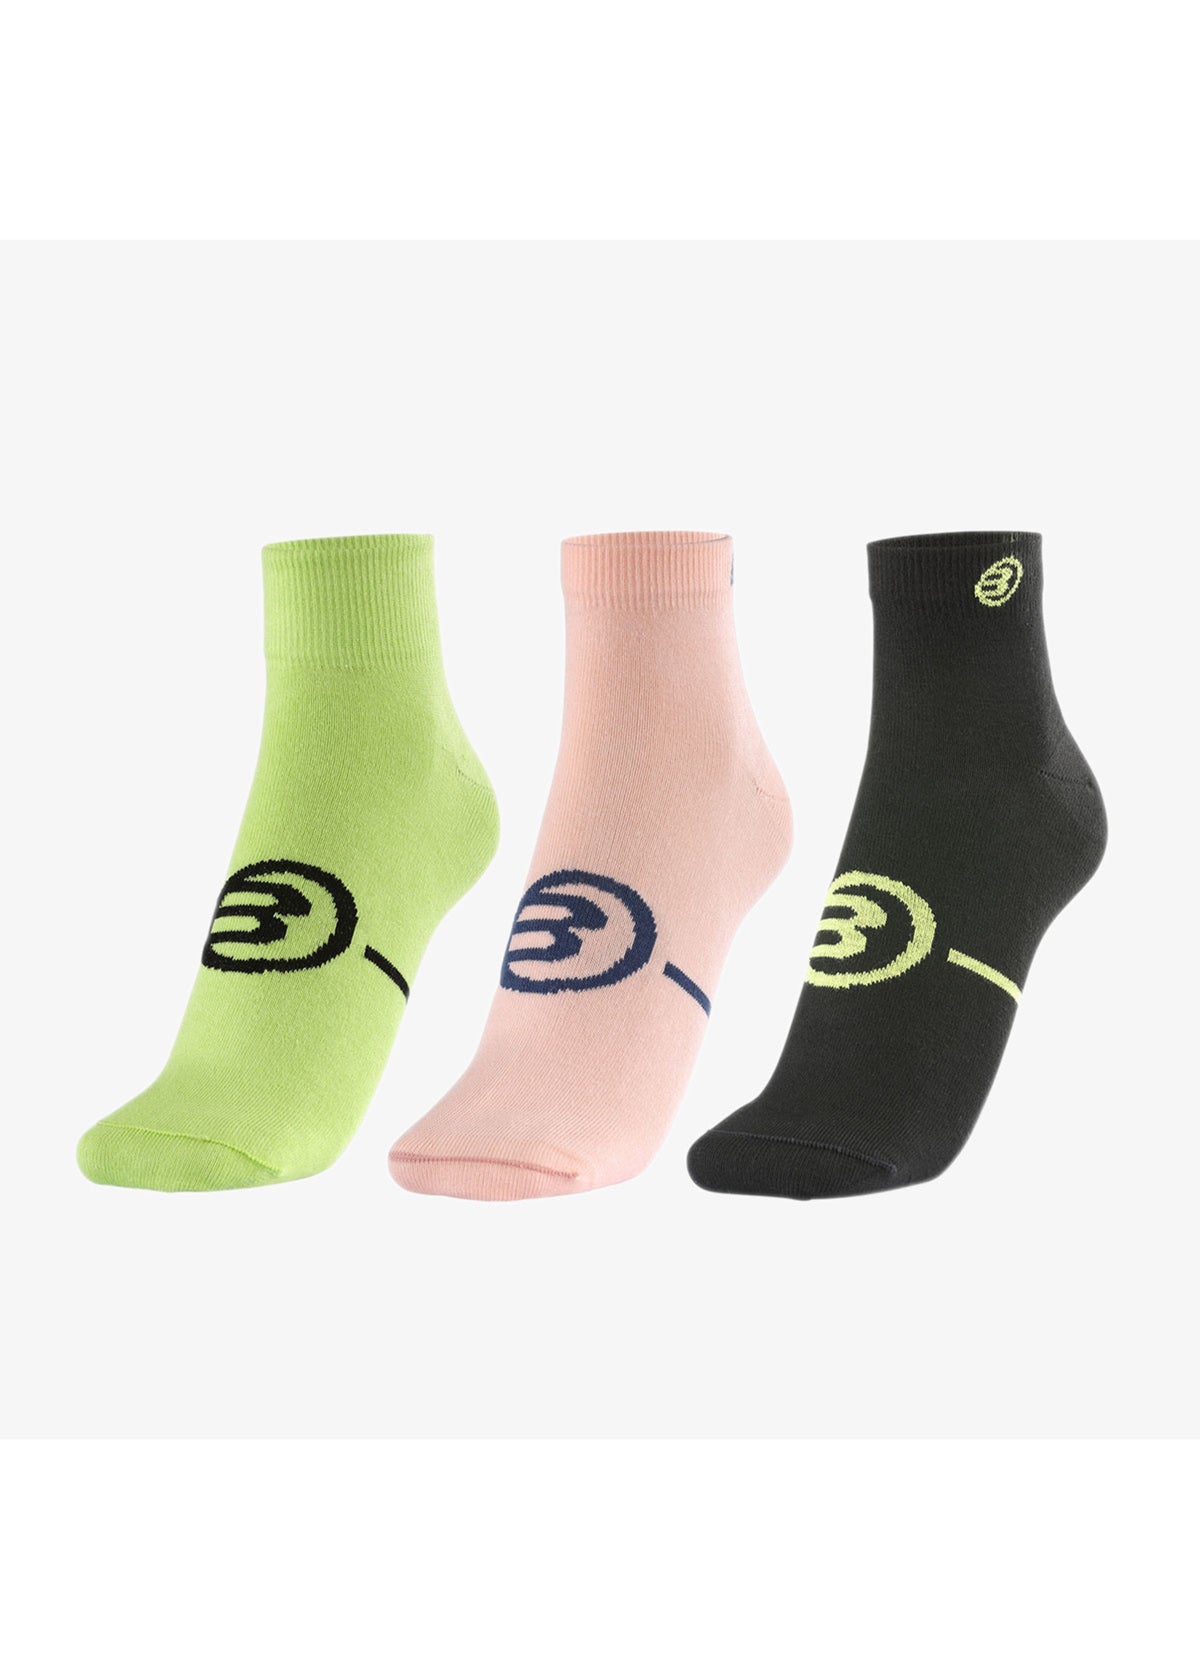 Sokken dames 3-pack roze/groen/zwart BP-2202